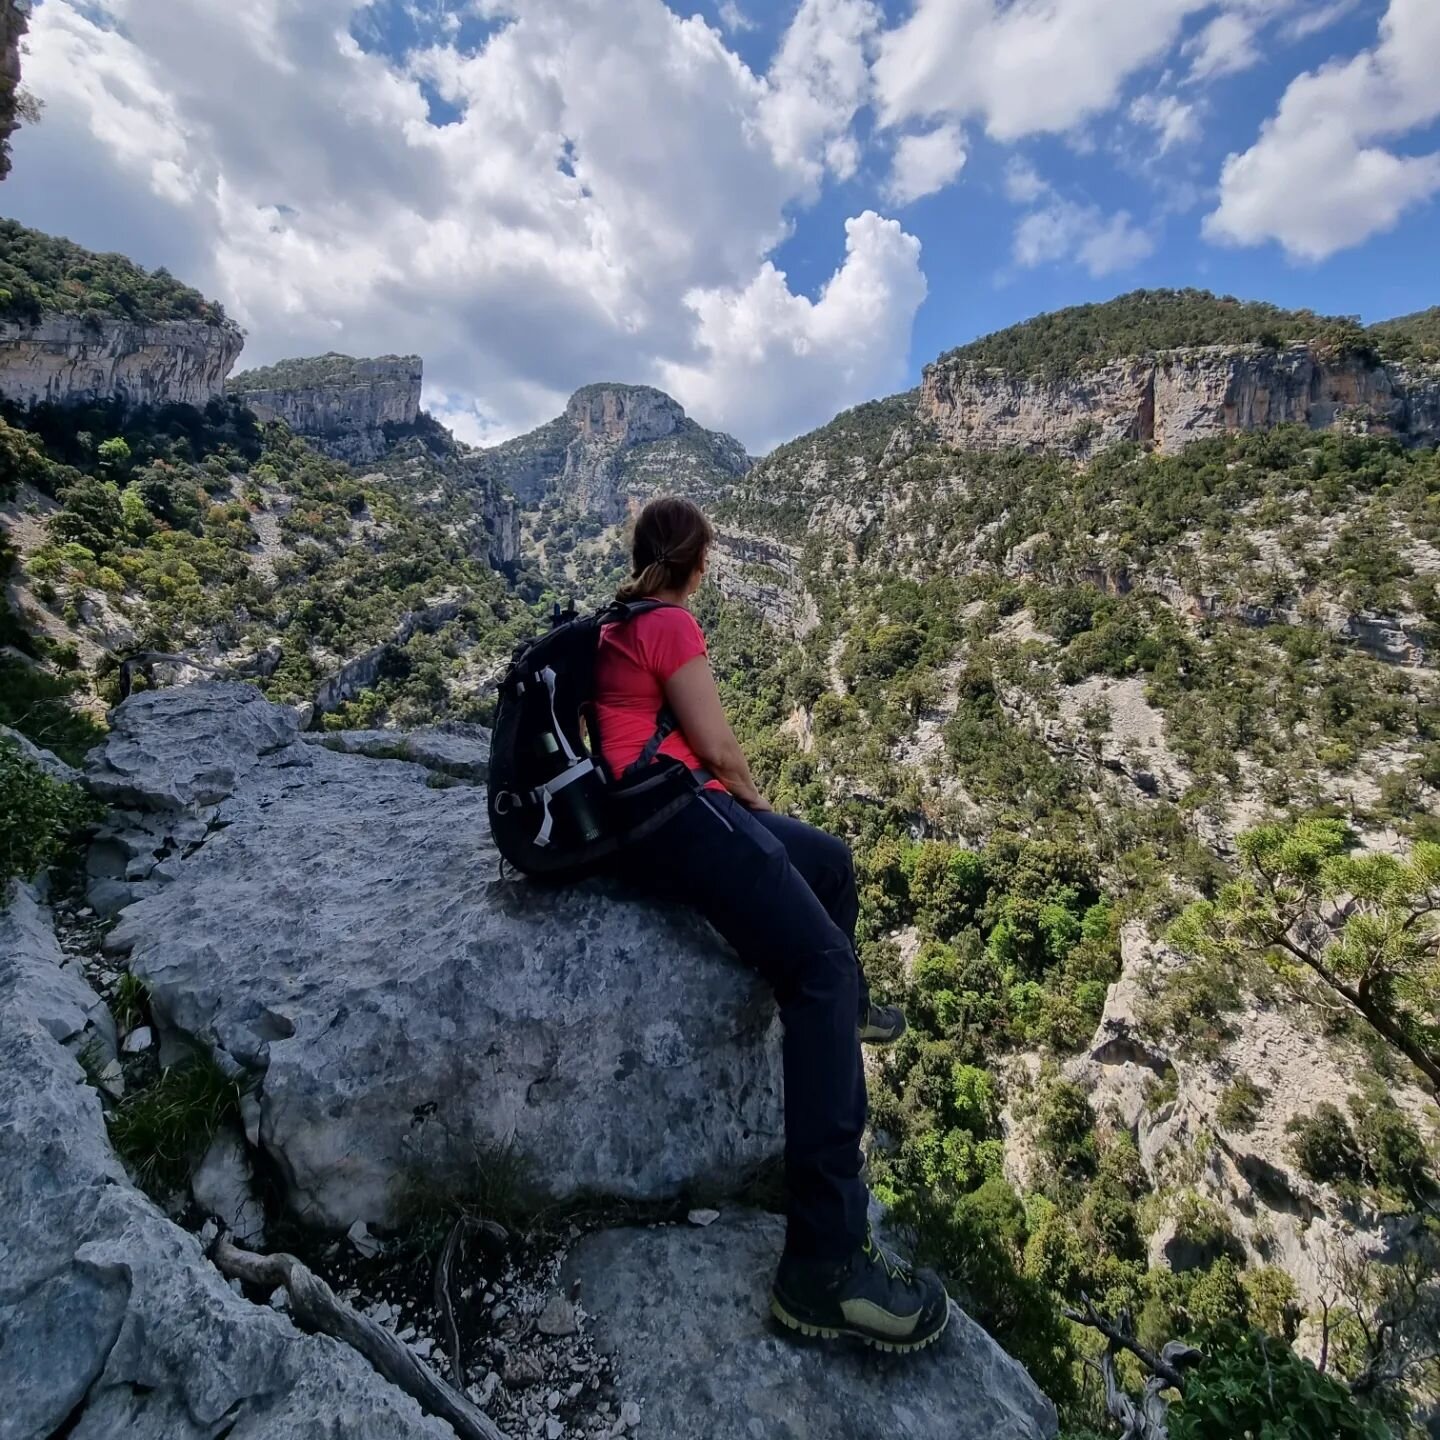 #Hiking into the Wildest #Sardinia

#sardiniaadventures #trekking #supramonte #adventures #exploresardinia #intothewild #sardegna #sardinien #sardaigne #cerde&ntilde;a